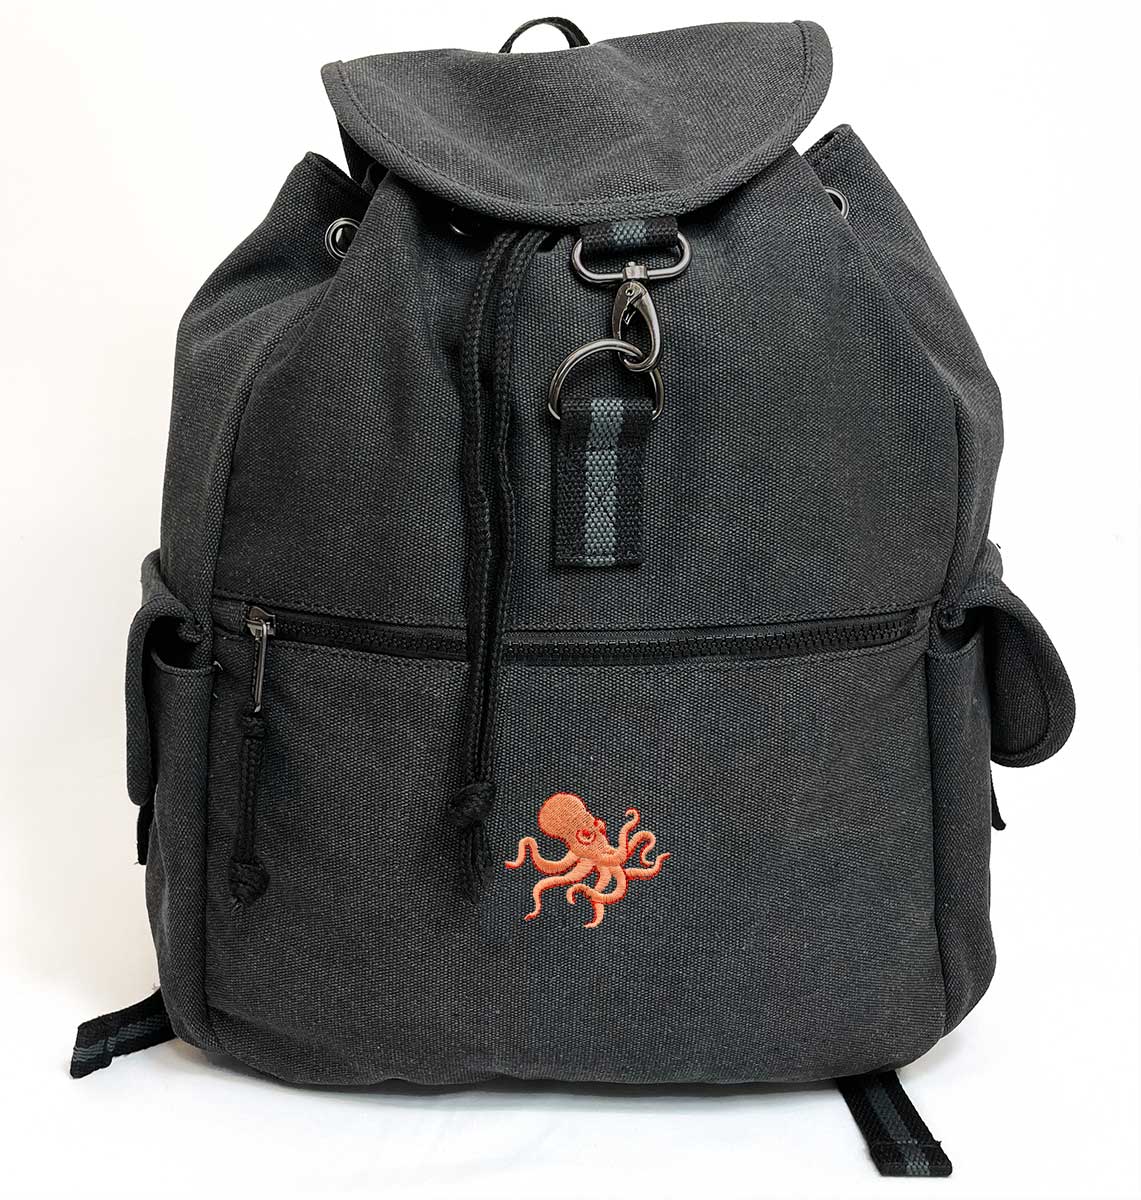 Octopus Vintage Canvas Backpack - Blue Panda